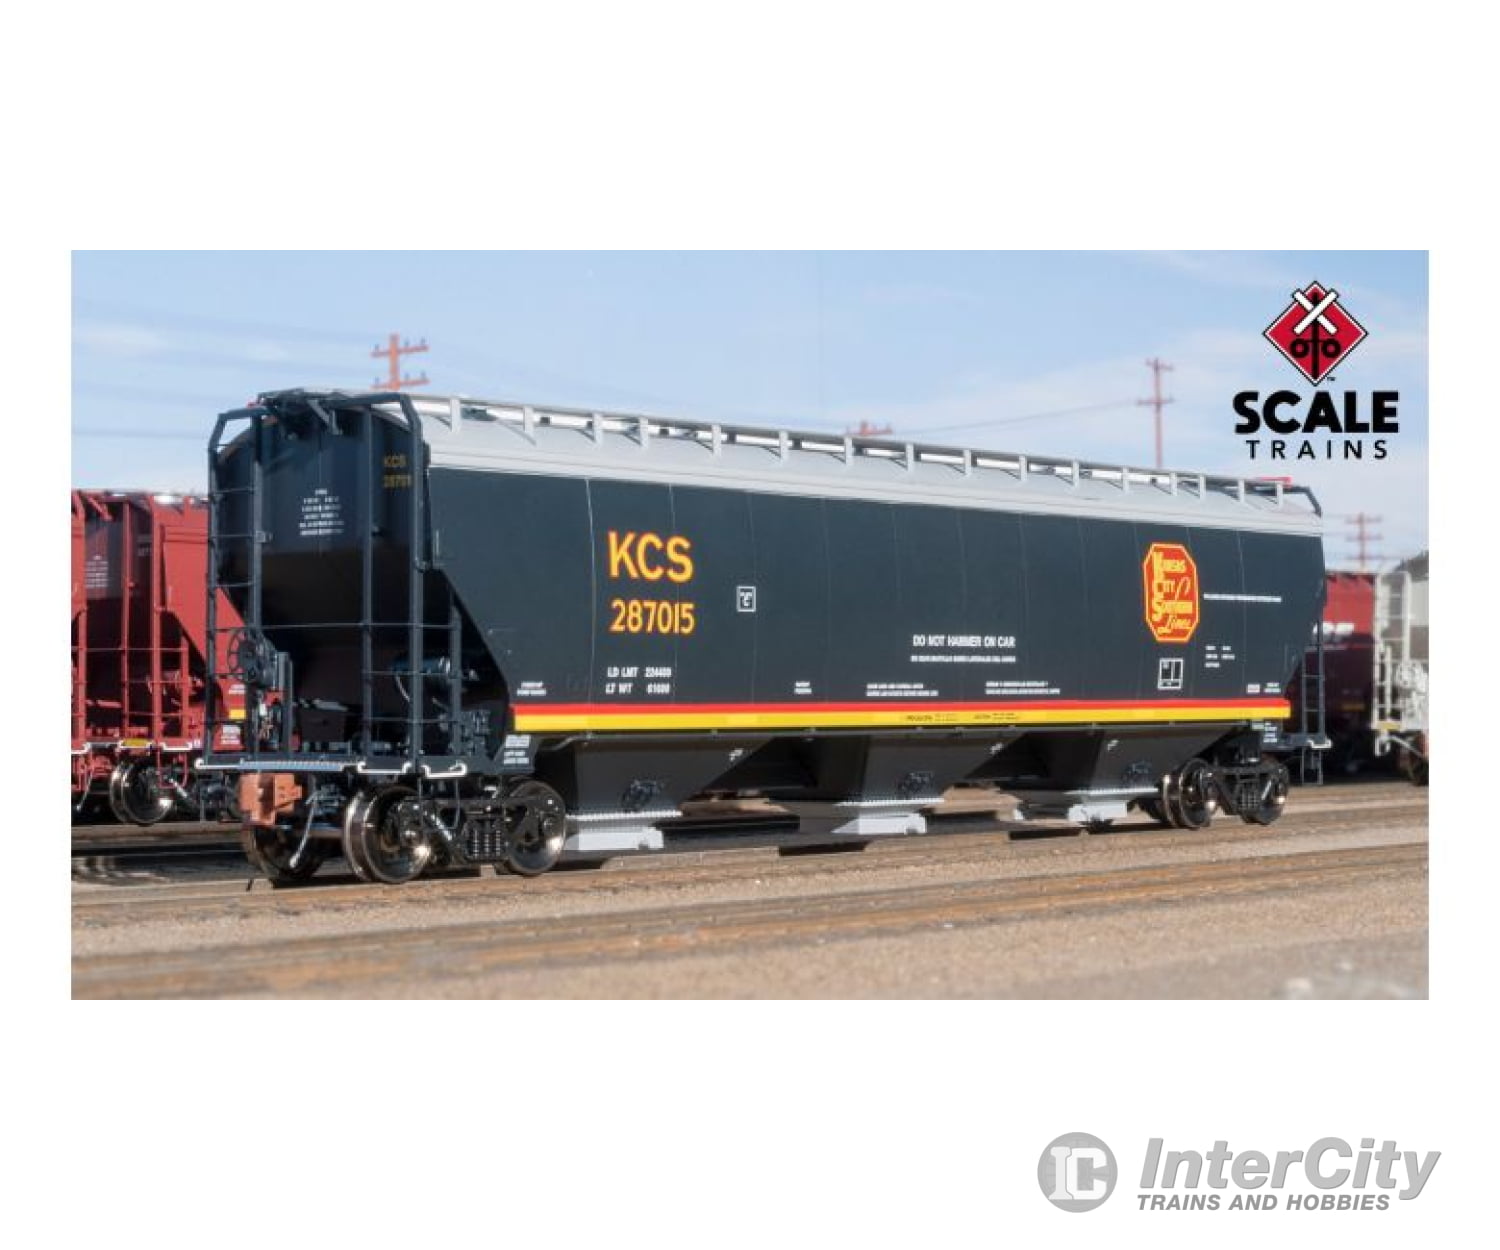 Scale Trains Sxt30818 Rivet Counter Ho Gunderson Covered Hopper Kansas City Southern - Belle Rd# Kcs